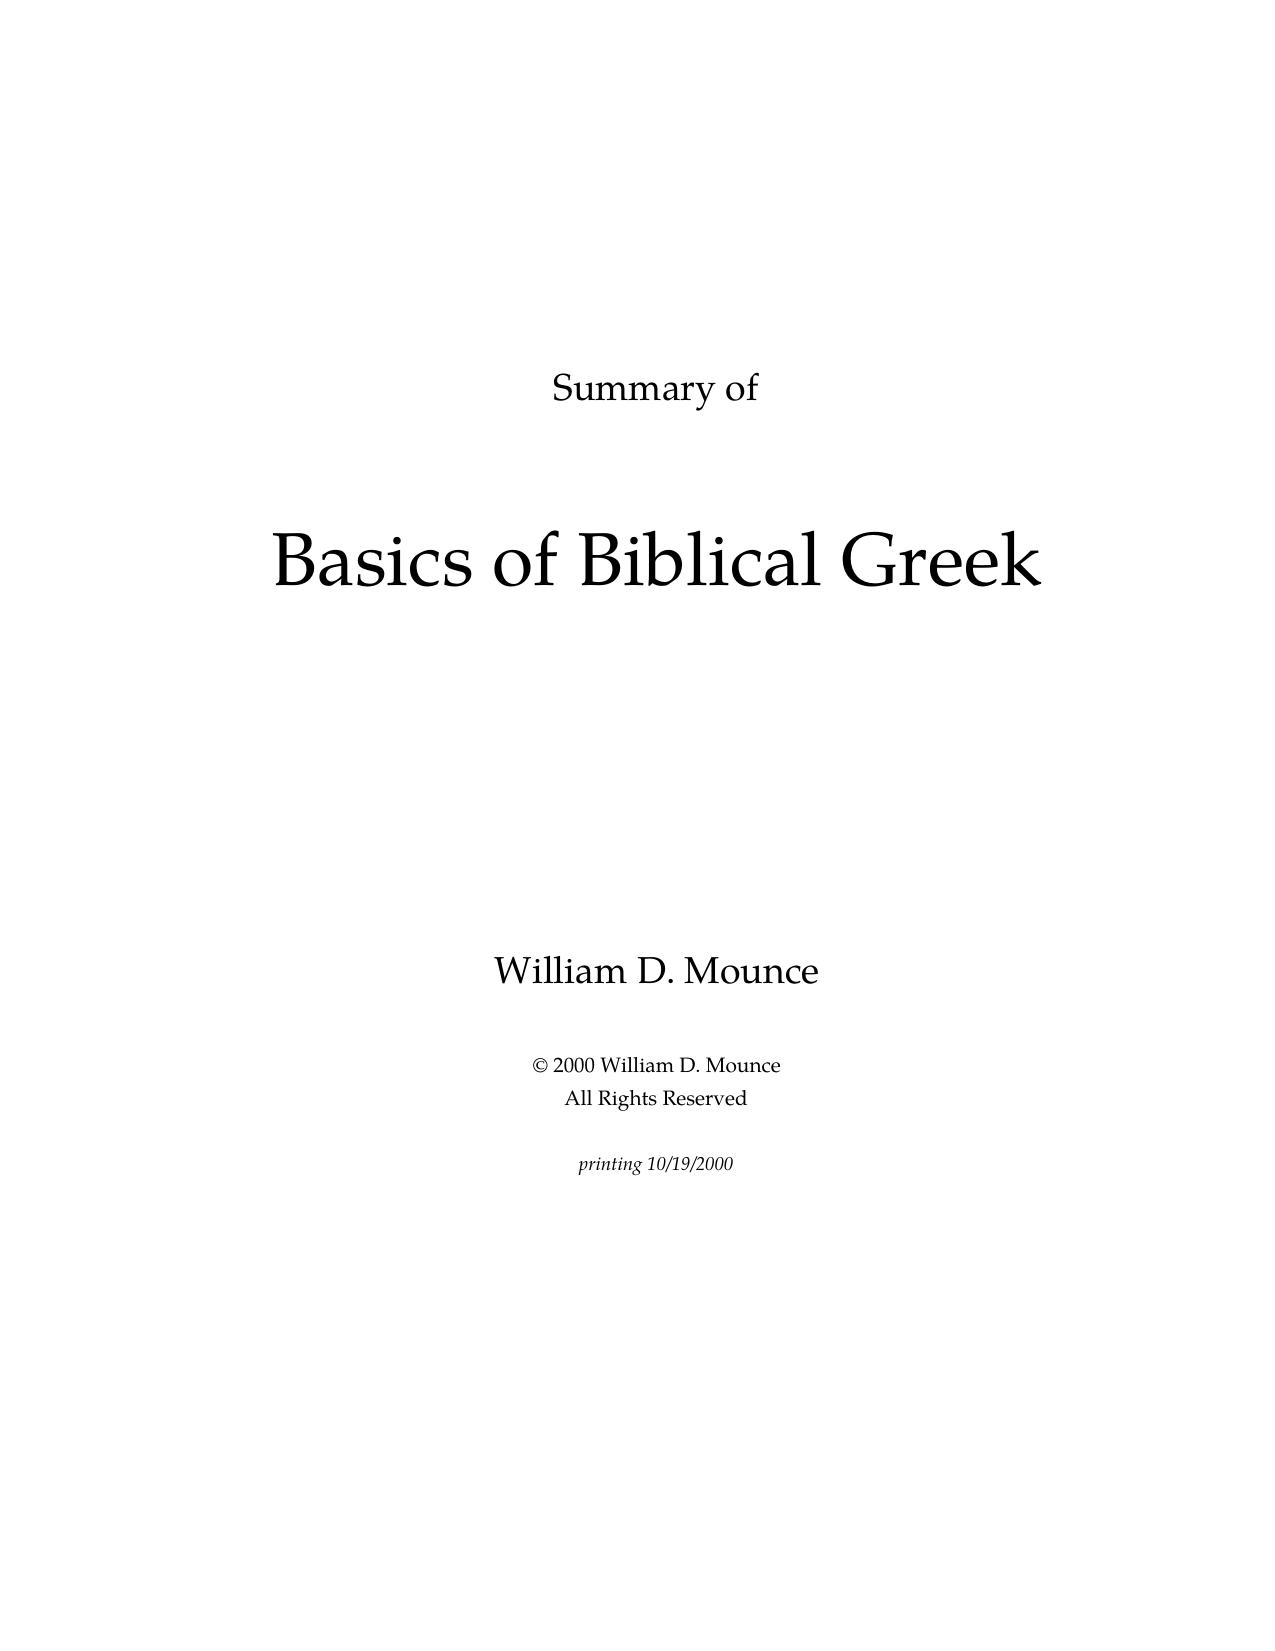 Summary of Basics of Biblical Greek by Bill Mounce